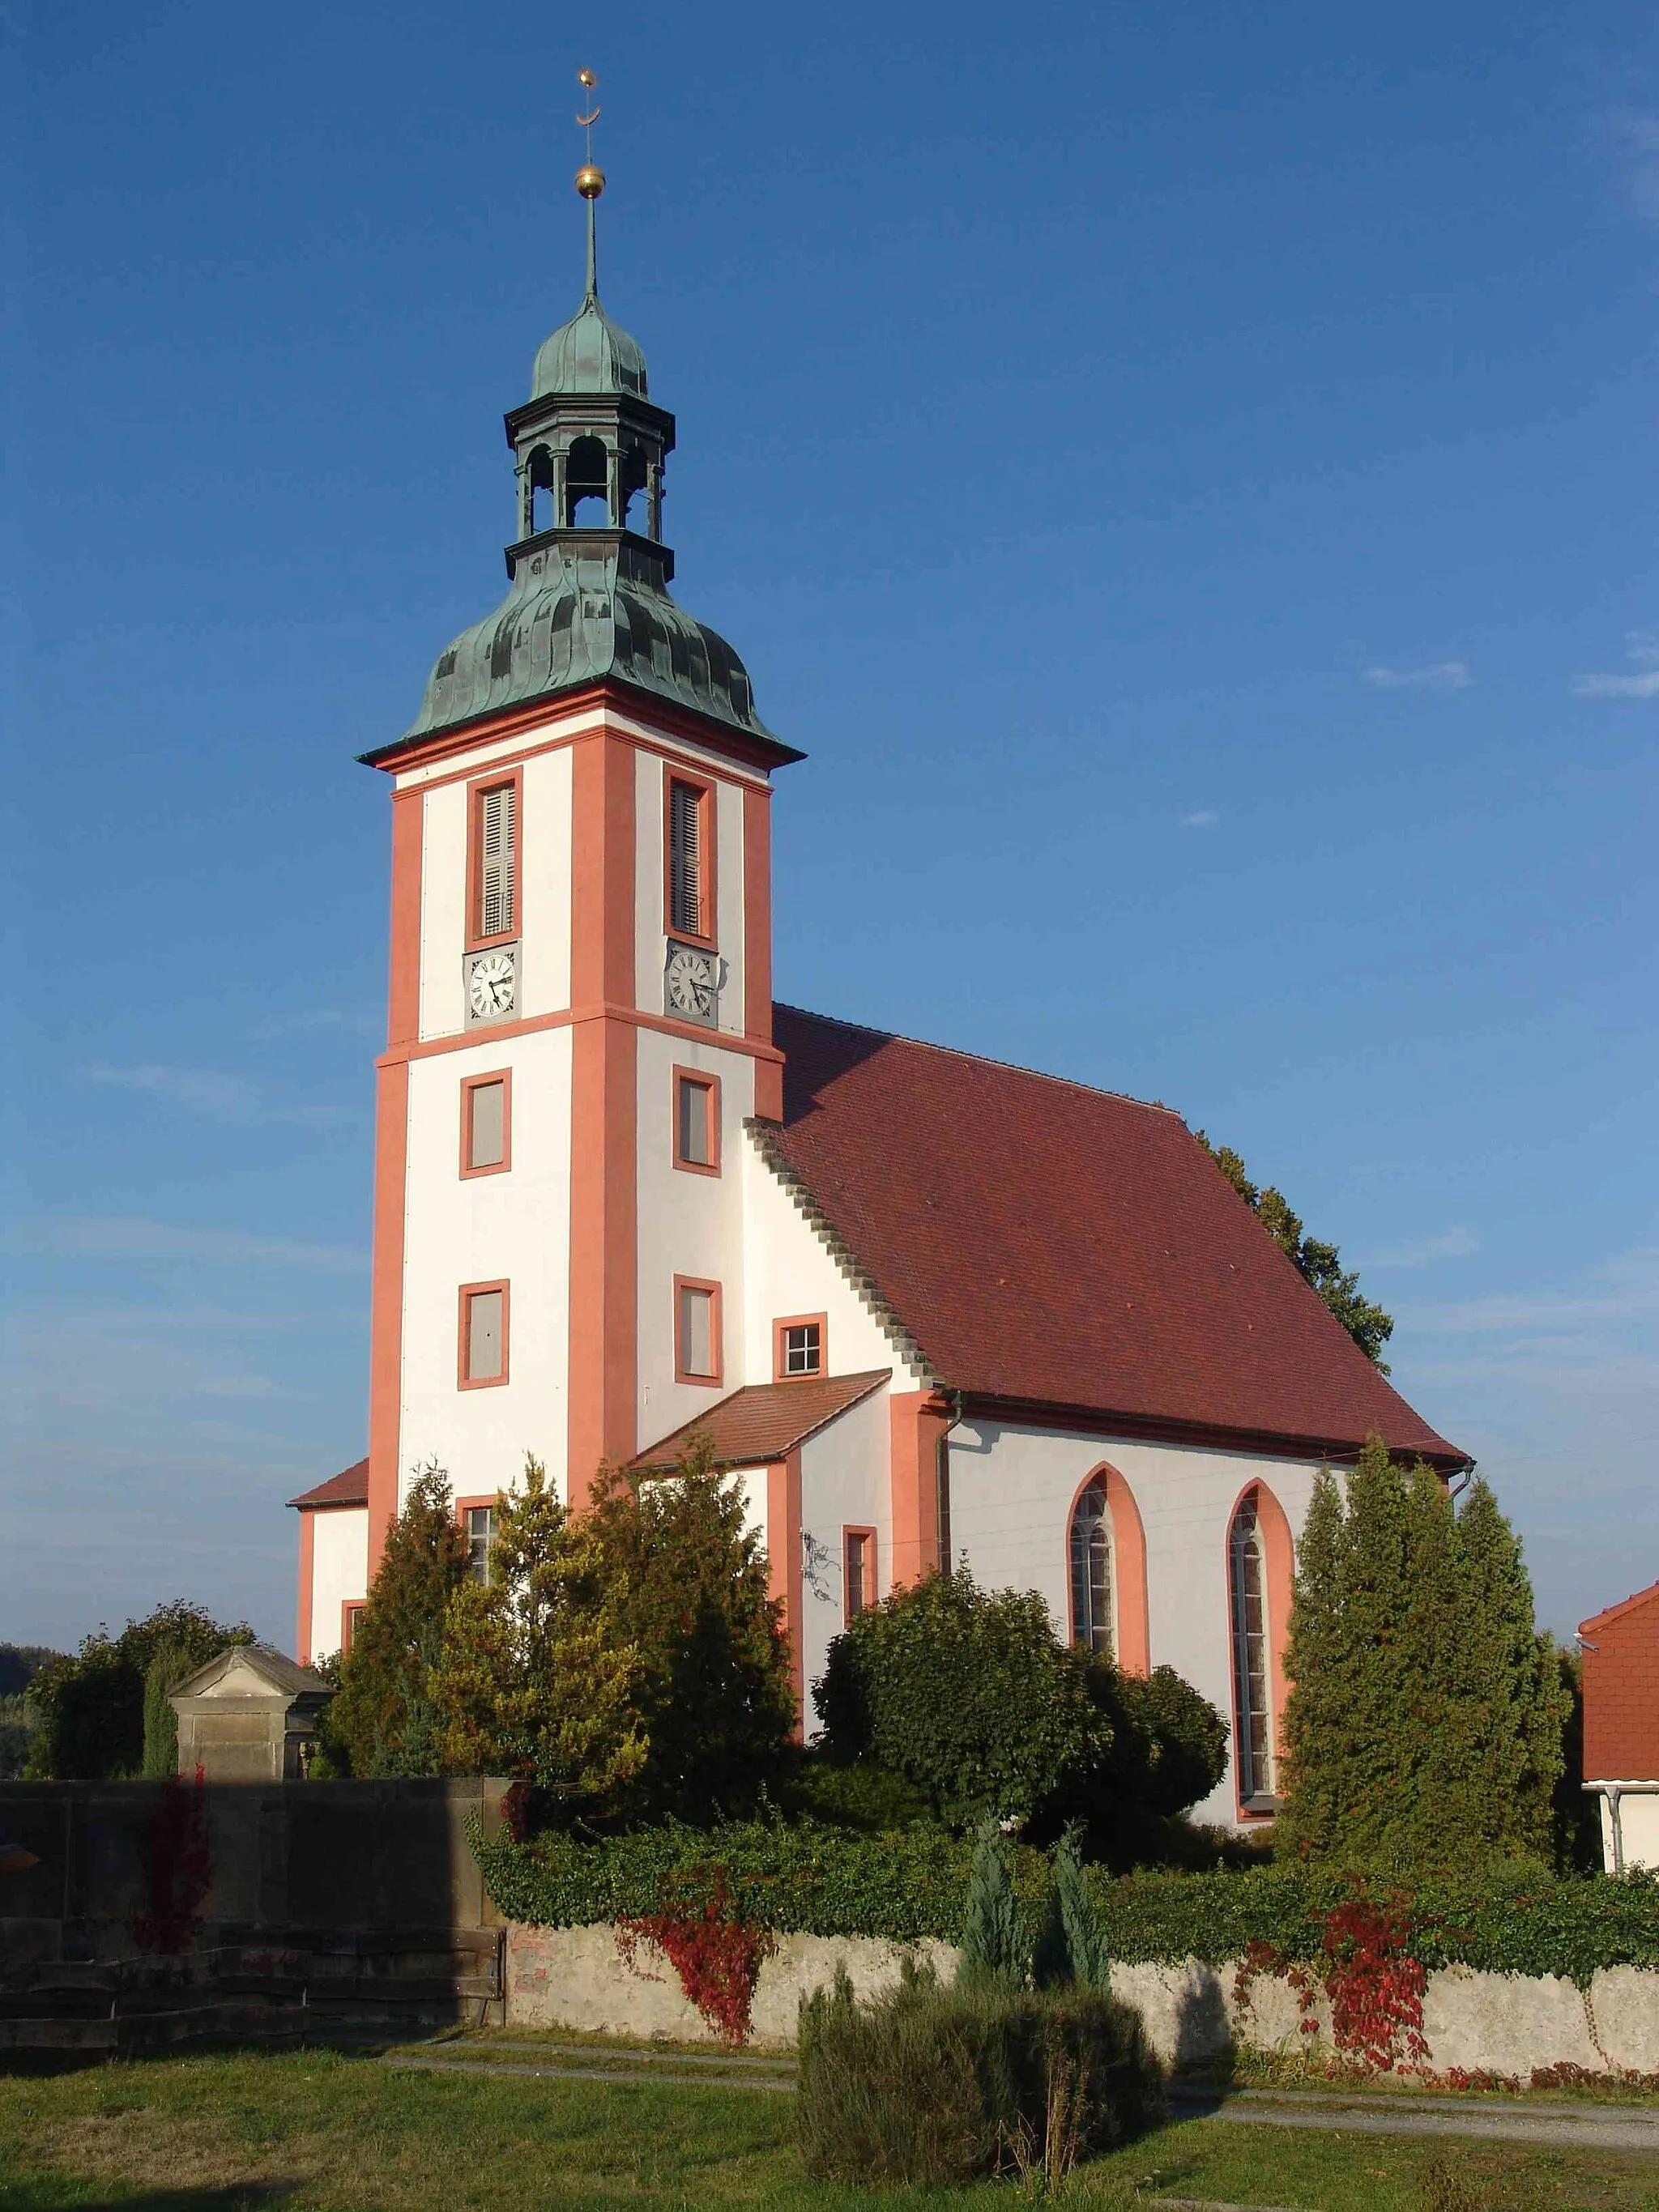 Image of Leutersdorf